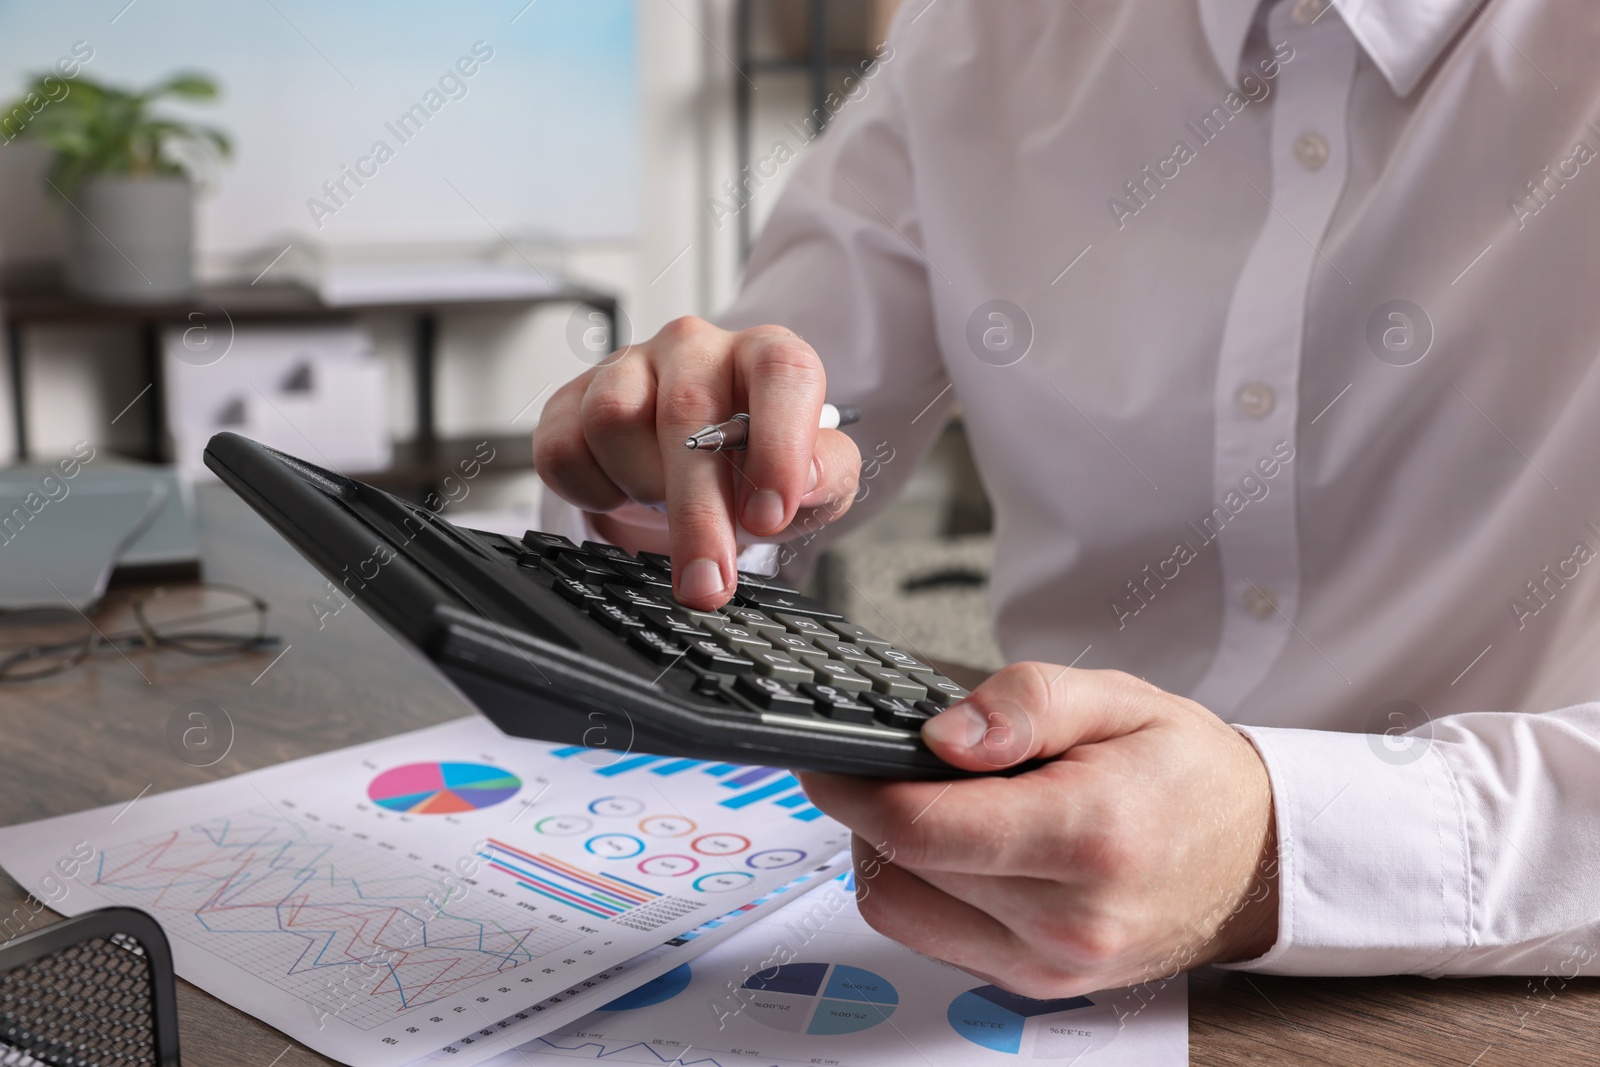 Photo of Man using calculator at wooden table indoors, closeup